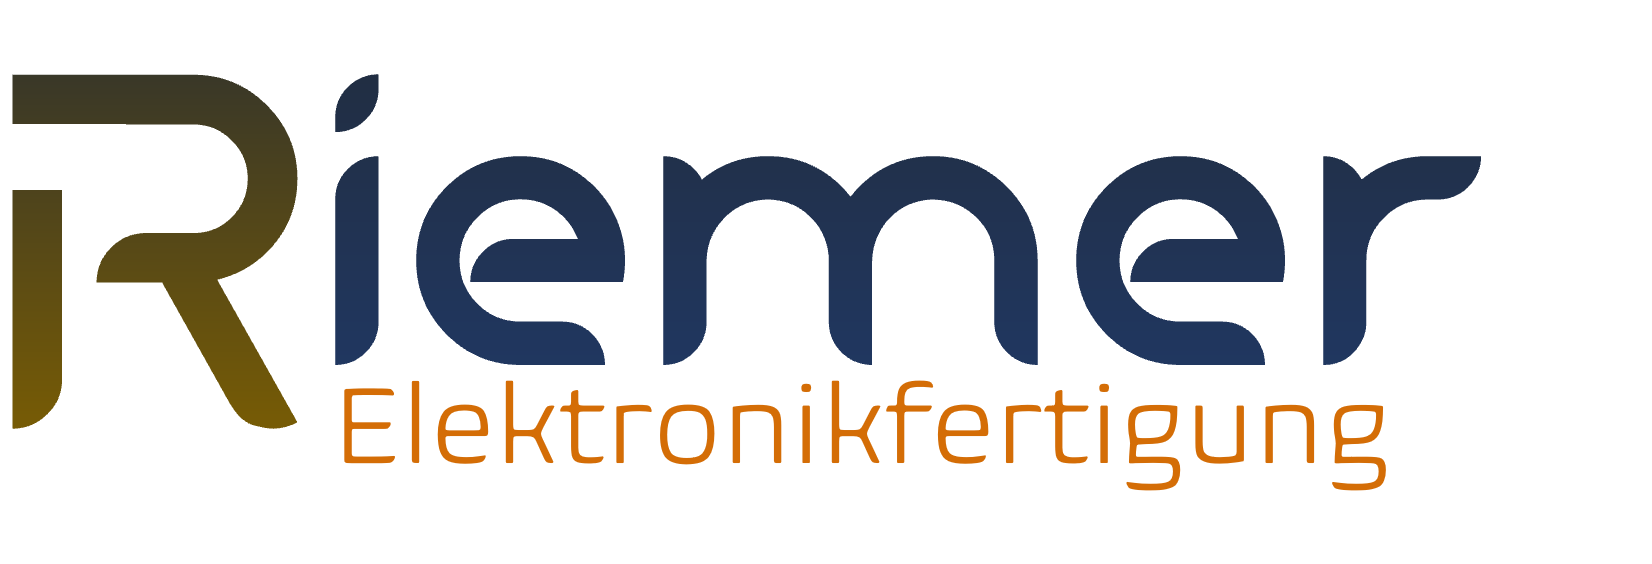 Elektronikfertigung-logo